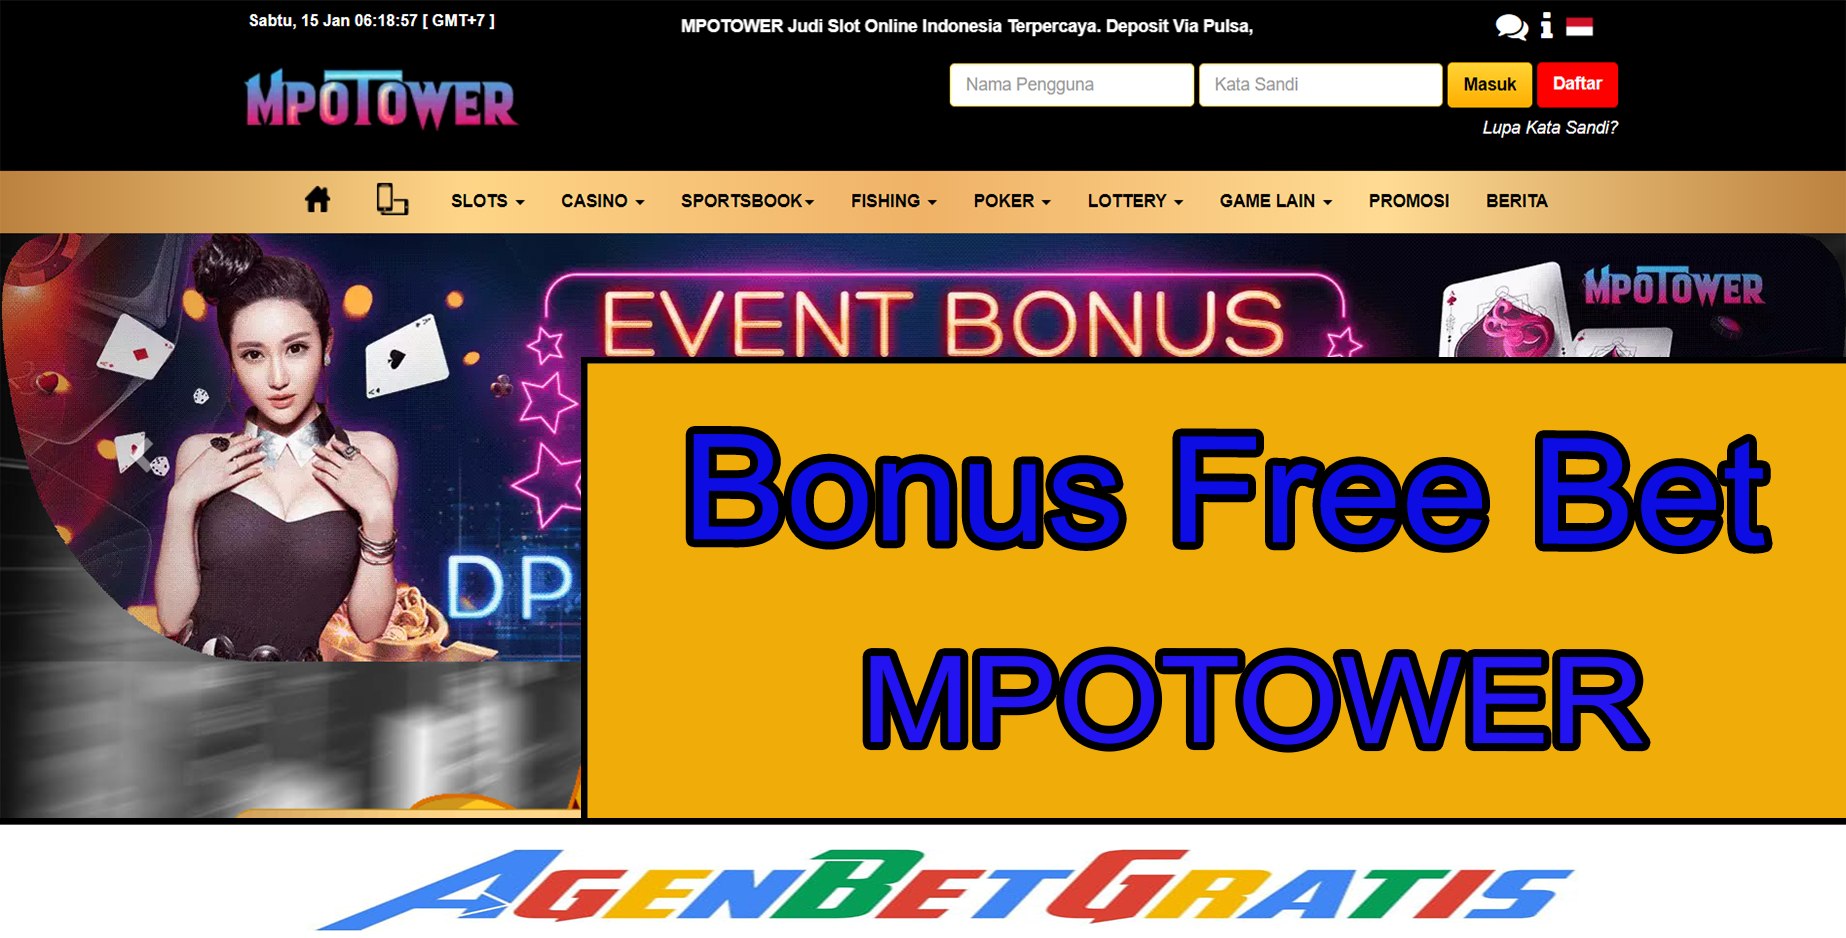 MPOTOWER - Bonus Free Bet